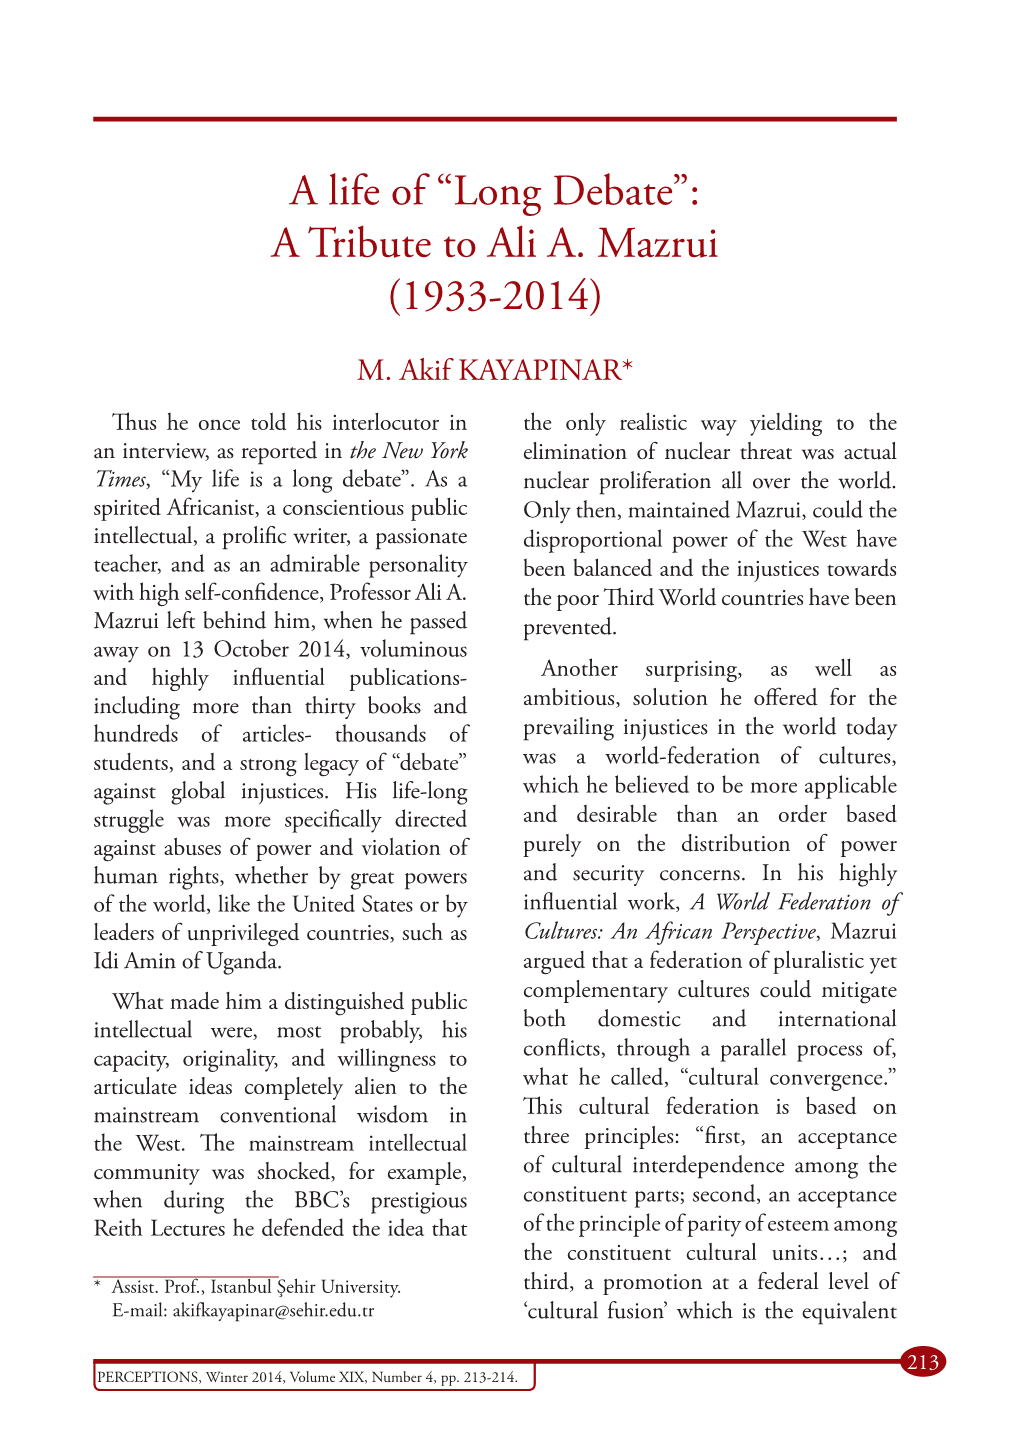 A Life of “Long Debate”: a Tribute to Ali A. Mazrui (1933-2014)